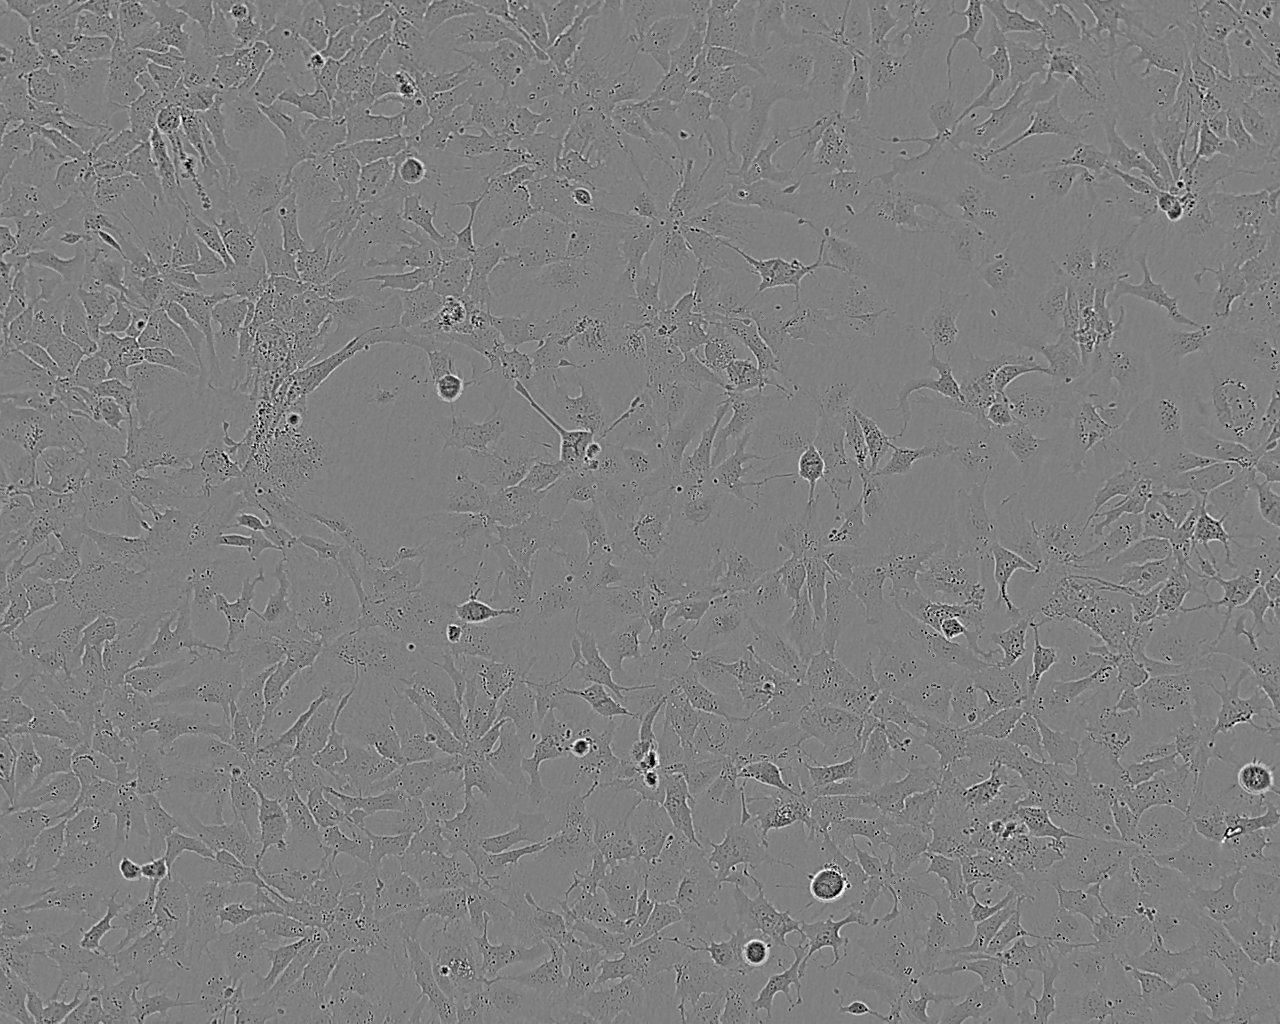 DBTRG-05MG Adherent人脑胶质母细胞瘤细胞系,DBTRG-05MG Adherent